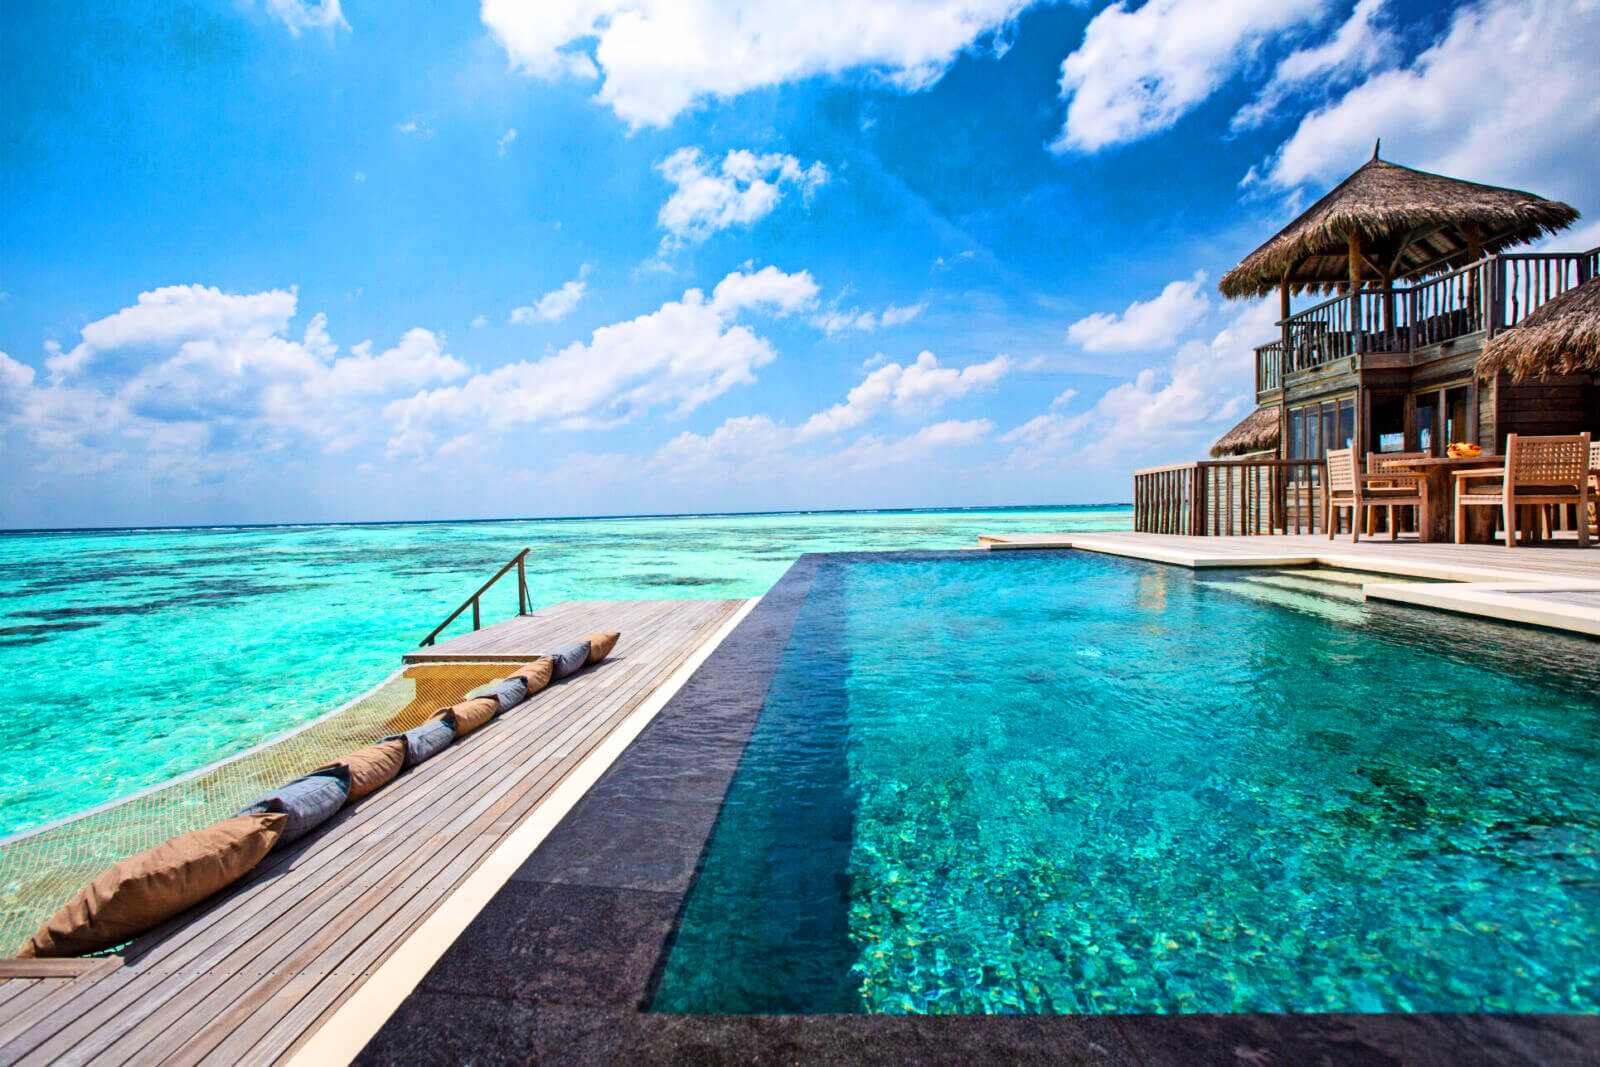 Gili Lankanfushi is one of the best Maldives overwater resorts